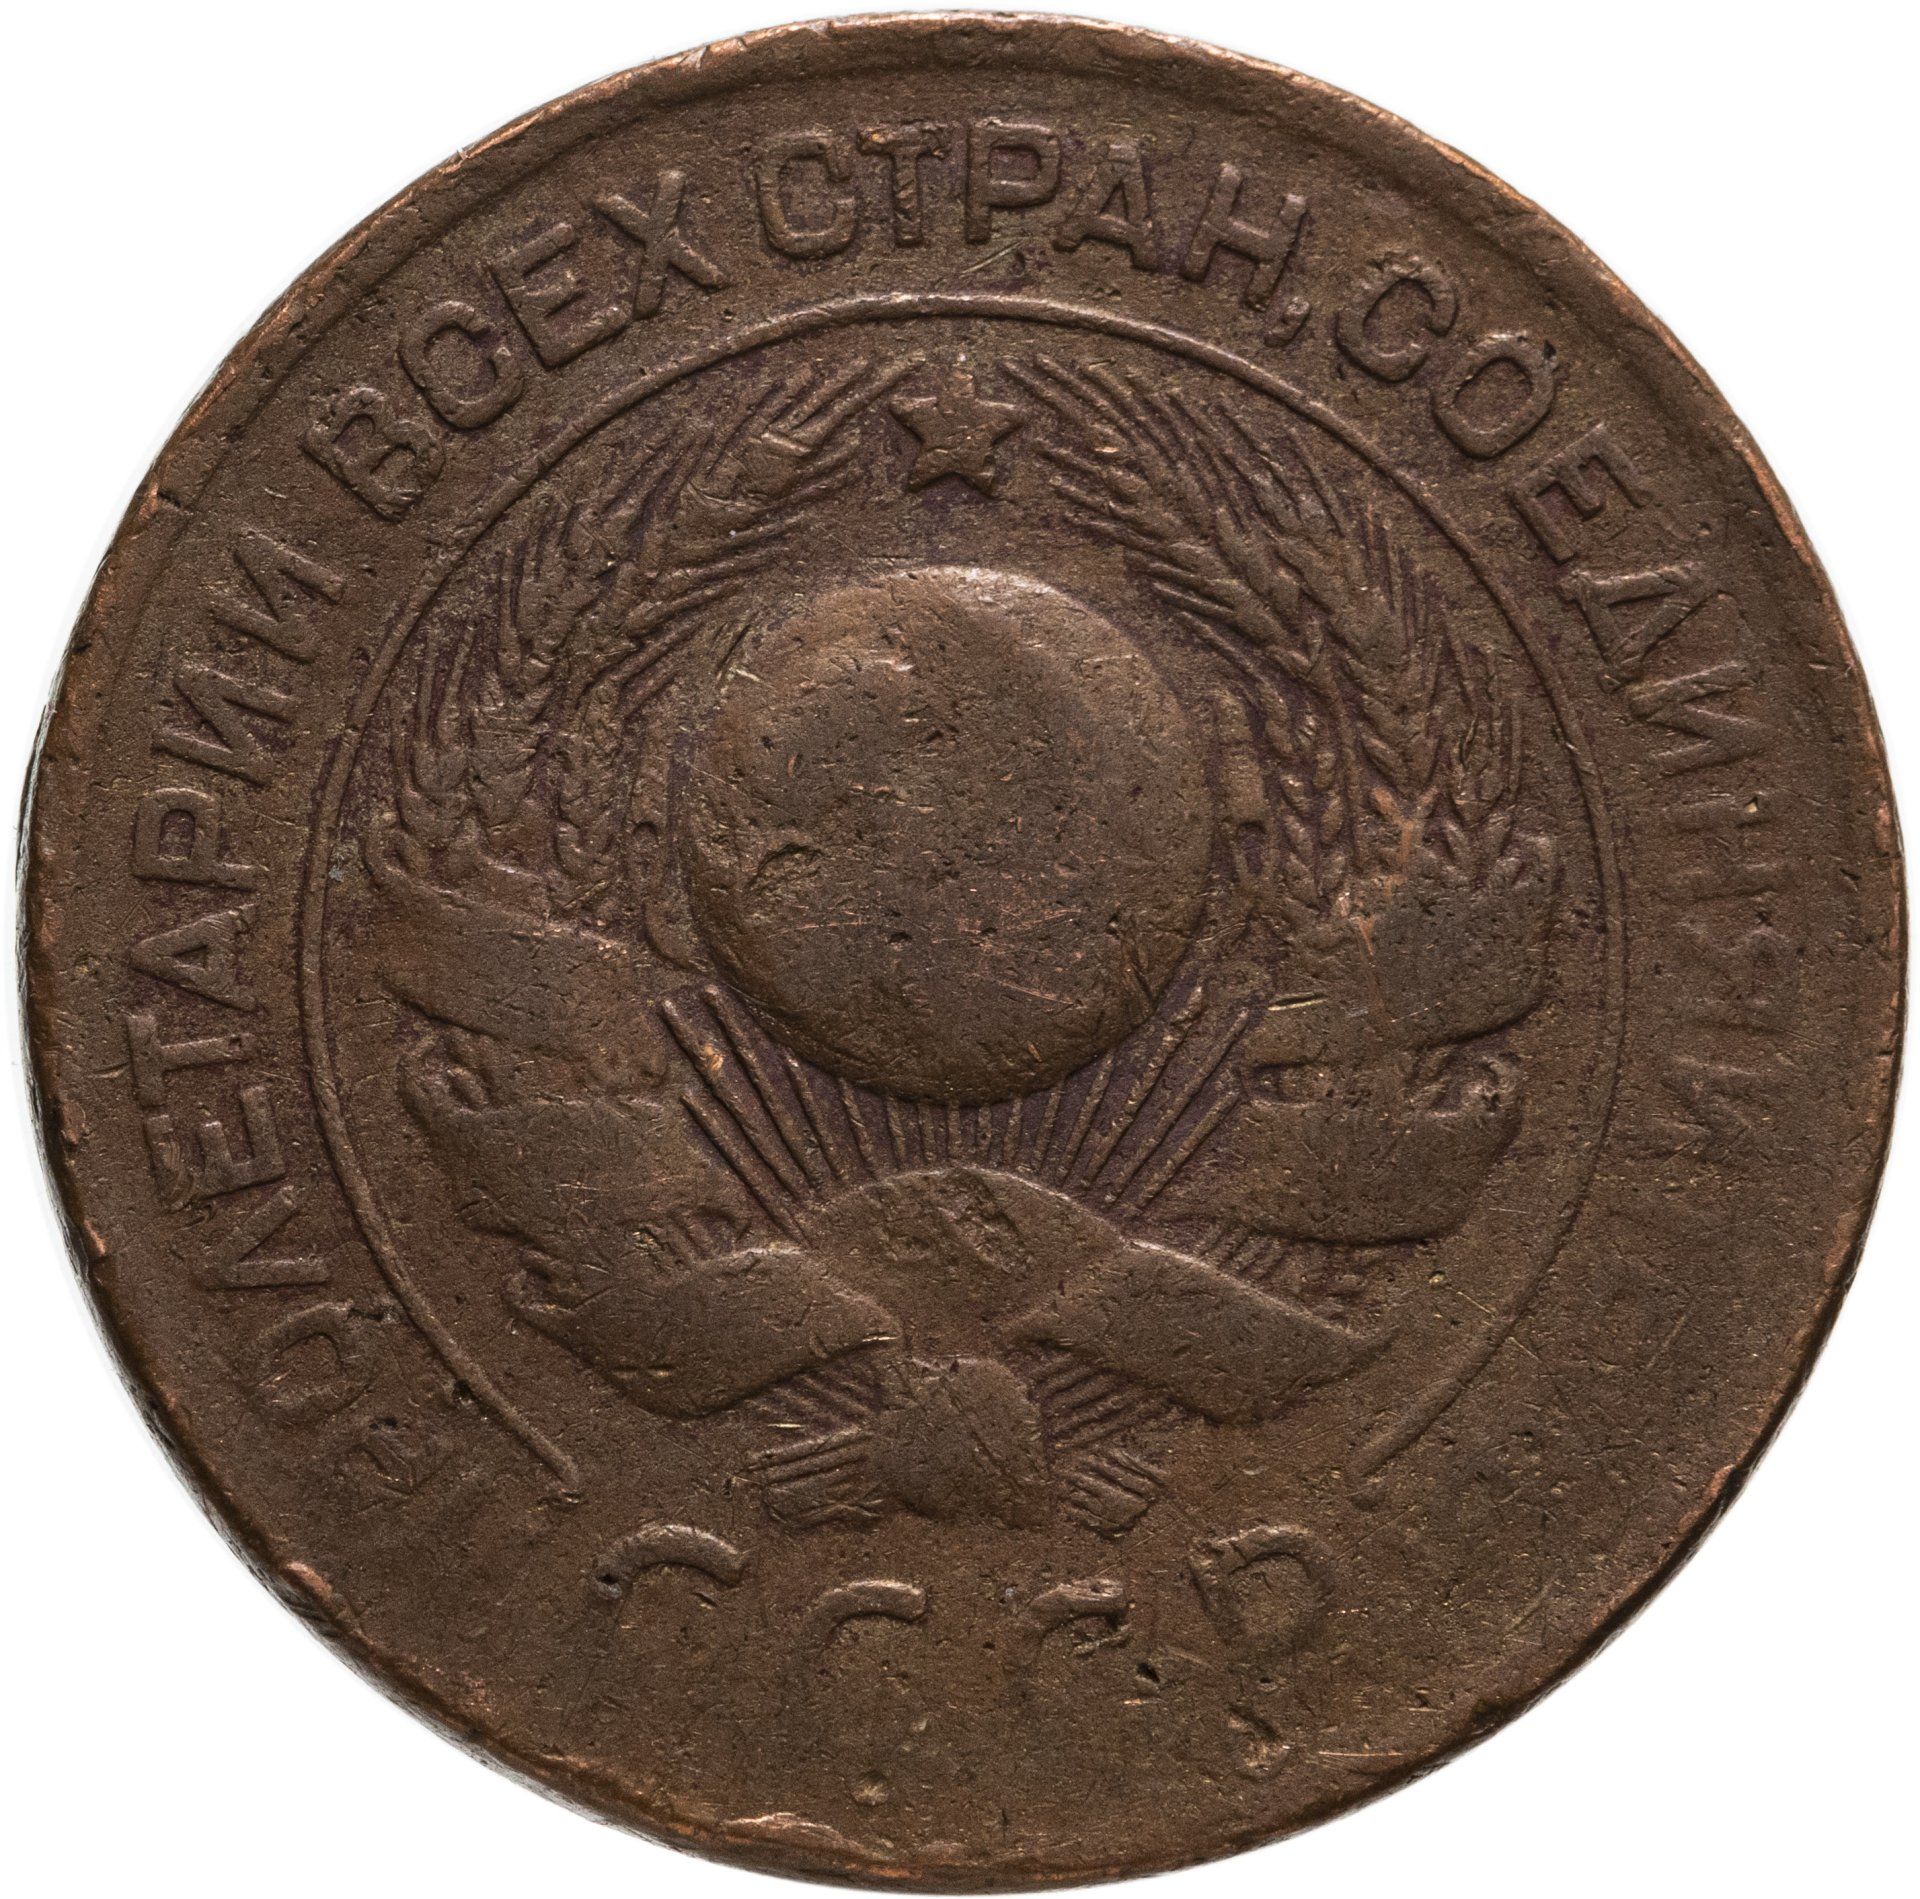 Цена монеты ссср 2 копеек. 3 Копейки 1924. 3 Копейки 1924 UNC. 5 Копеек 1924 года. 5 Копеек 1924 гурт.